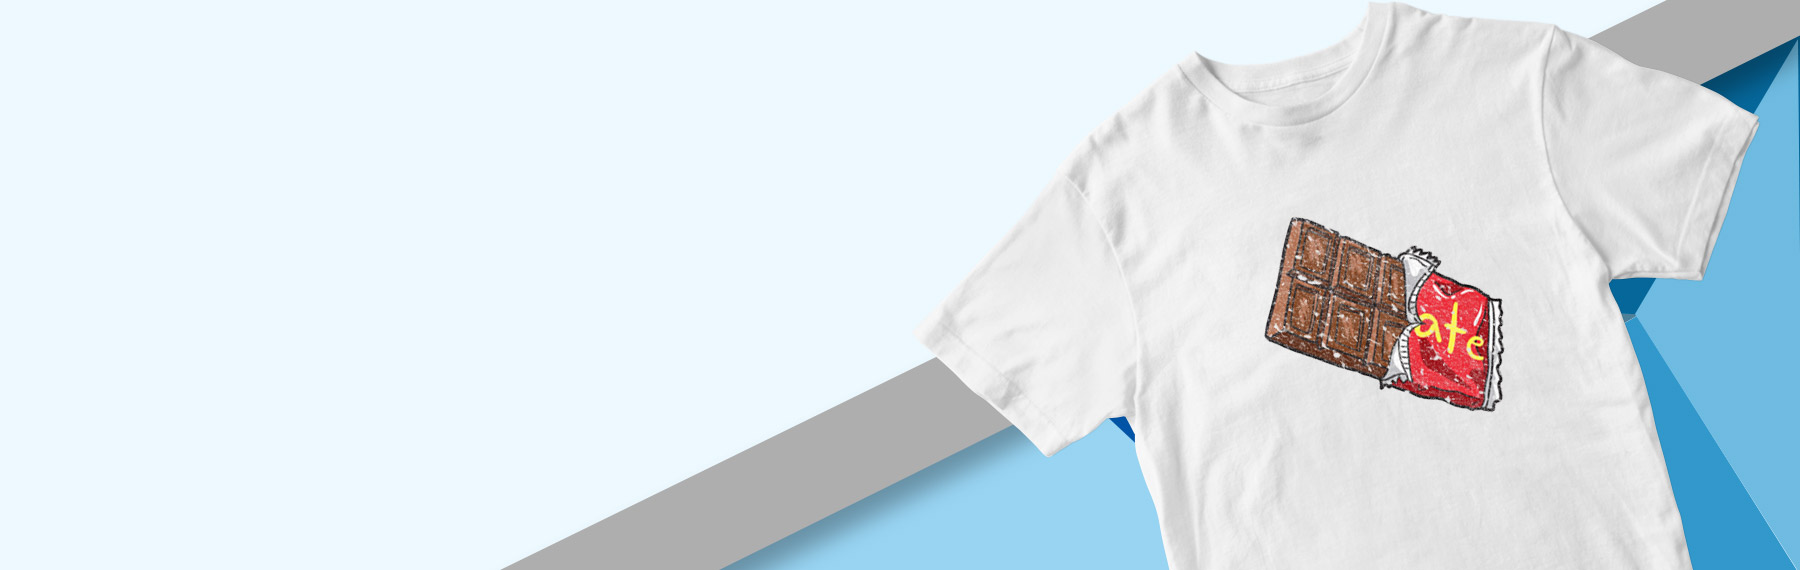 Custom T-Shirts - T-Shirt Printing with No Minimums and Setup Fees